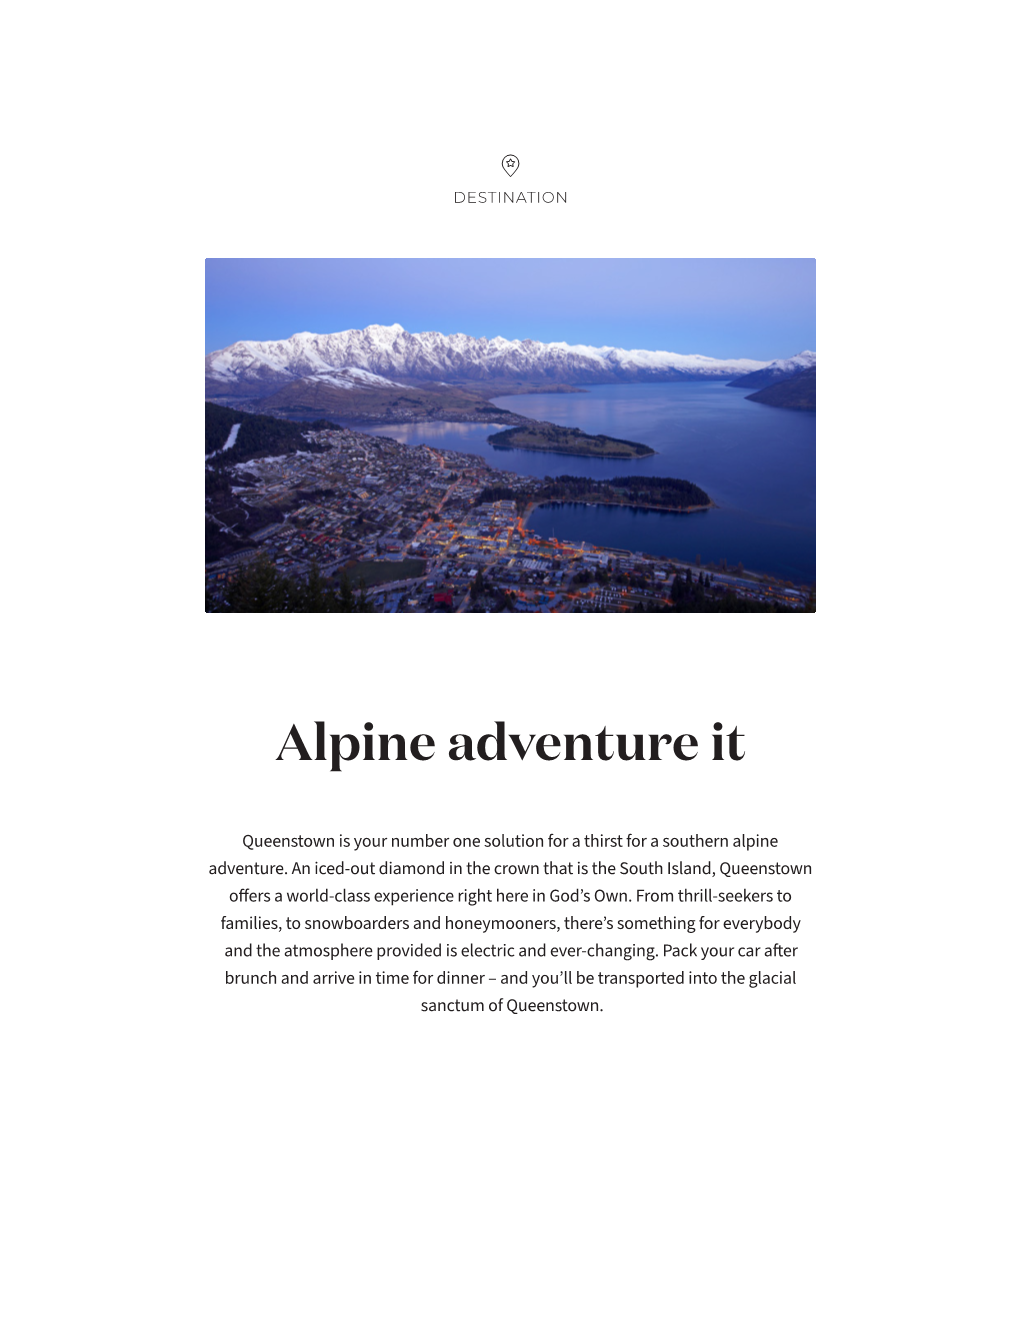 Alpine Adventure It